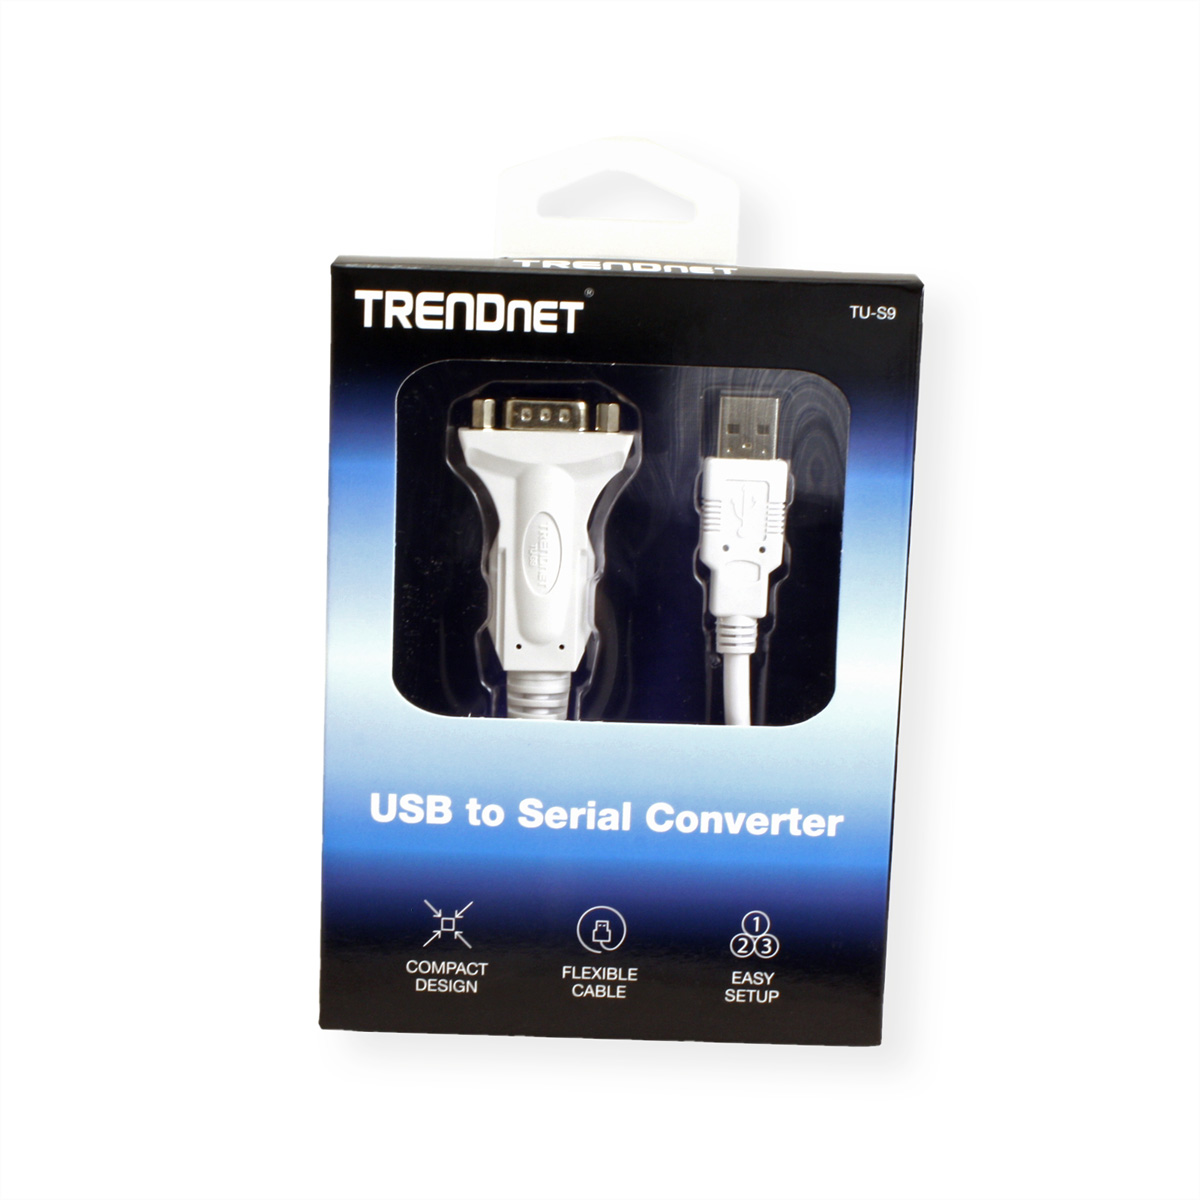 TRENDNET Konverter zu Converter USB Serial USB-zu-Seriell TU-S9